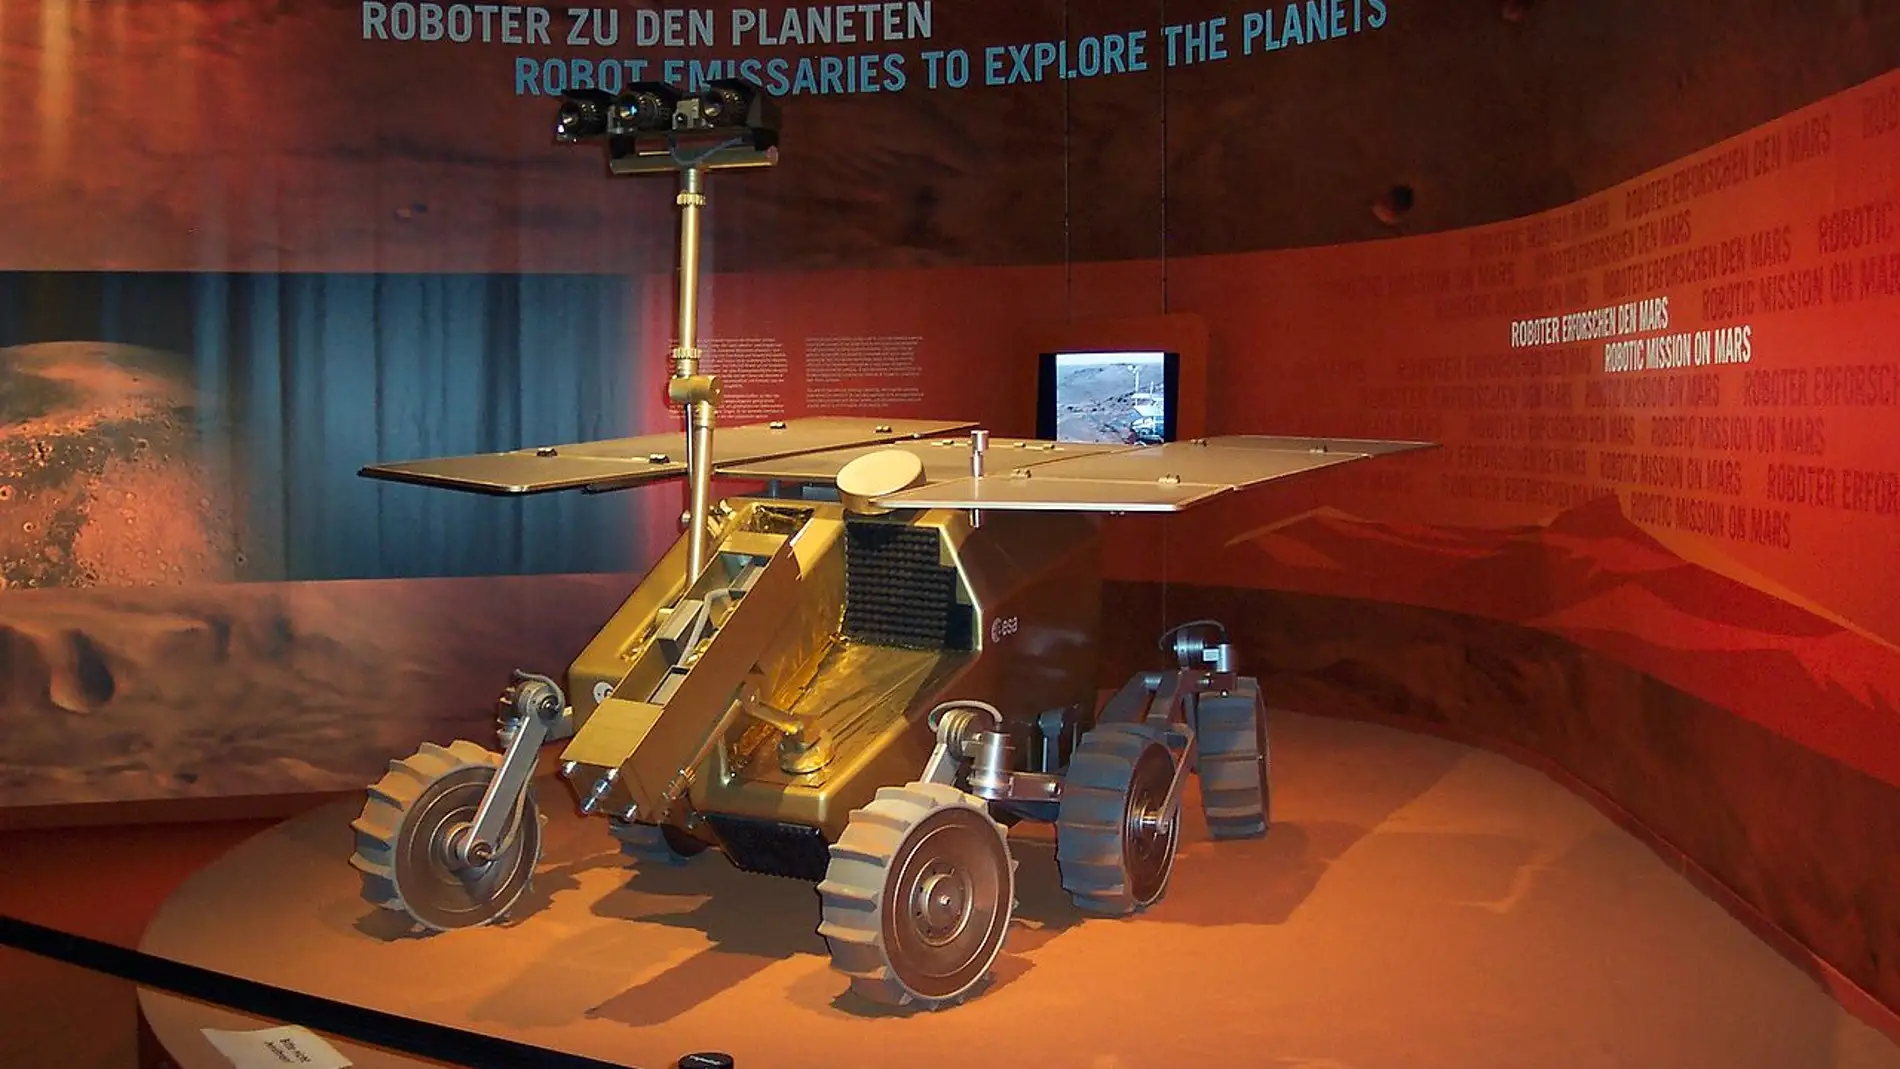 Modelo quasi-definitivo del rover ExoMars